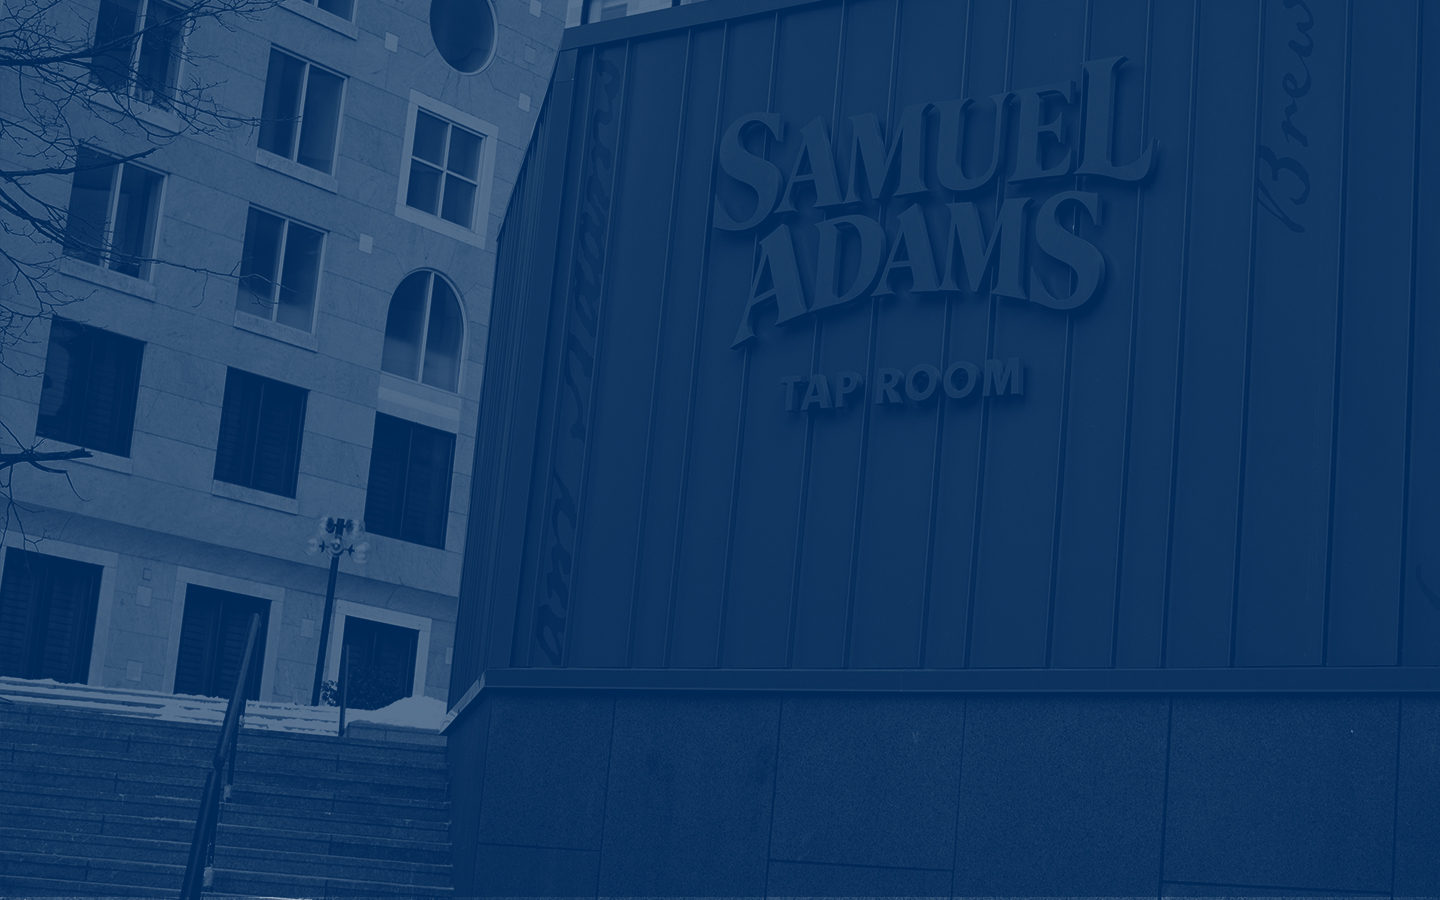 Samuel Adams Boston Tap Room 